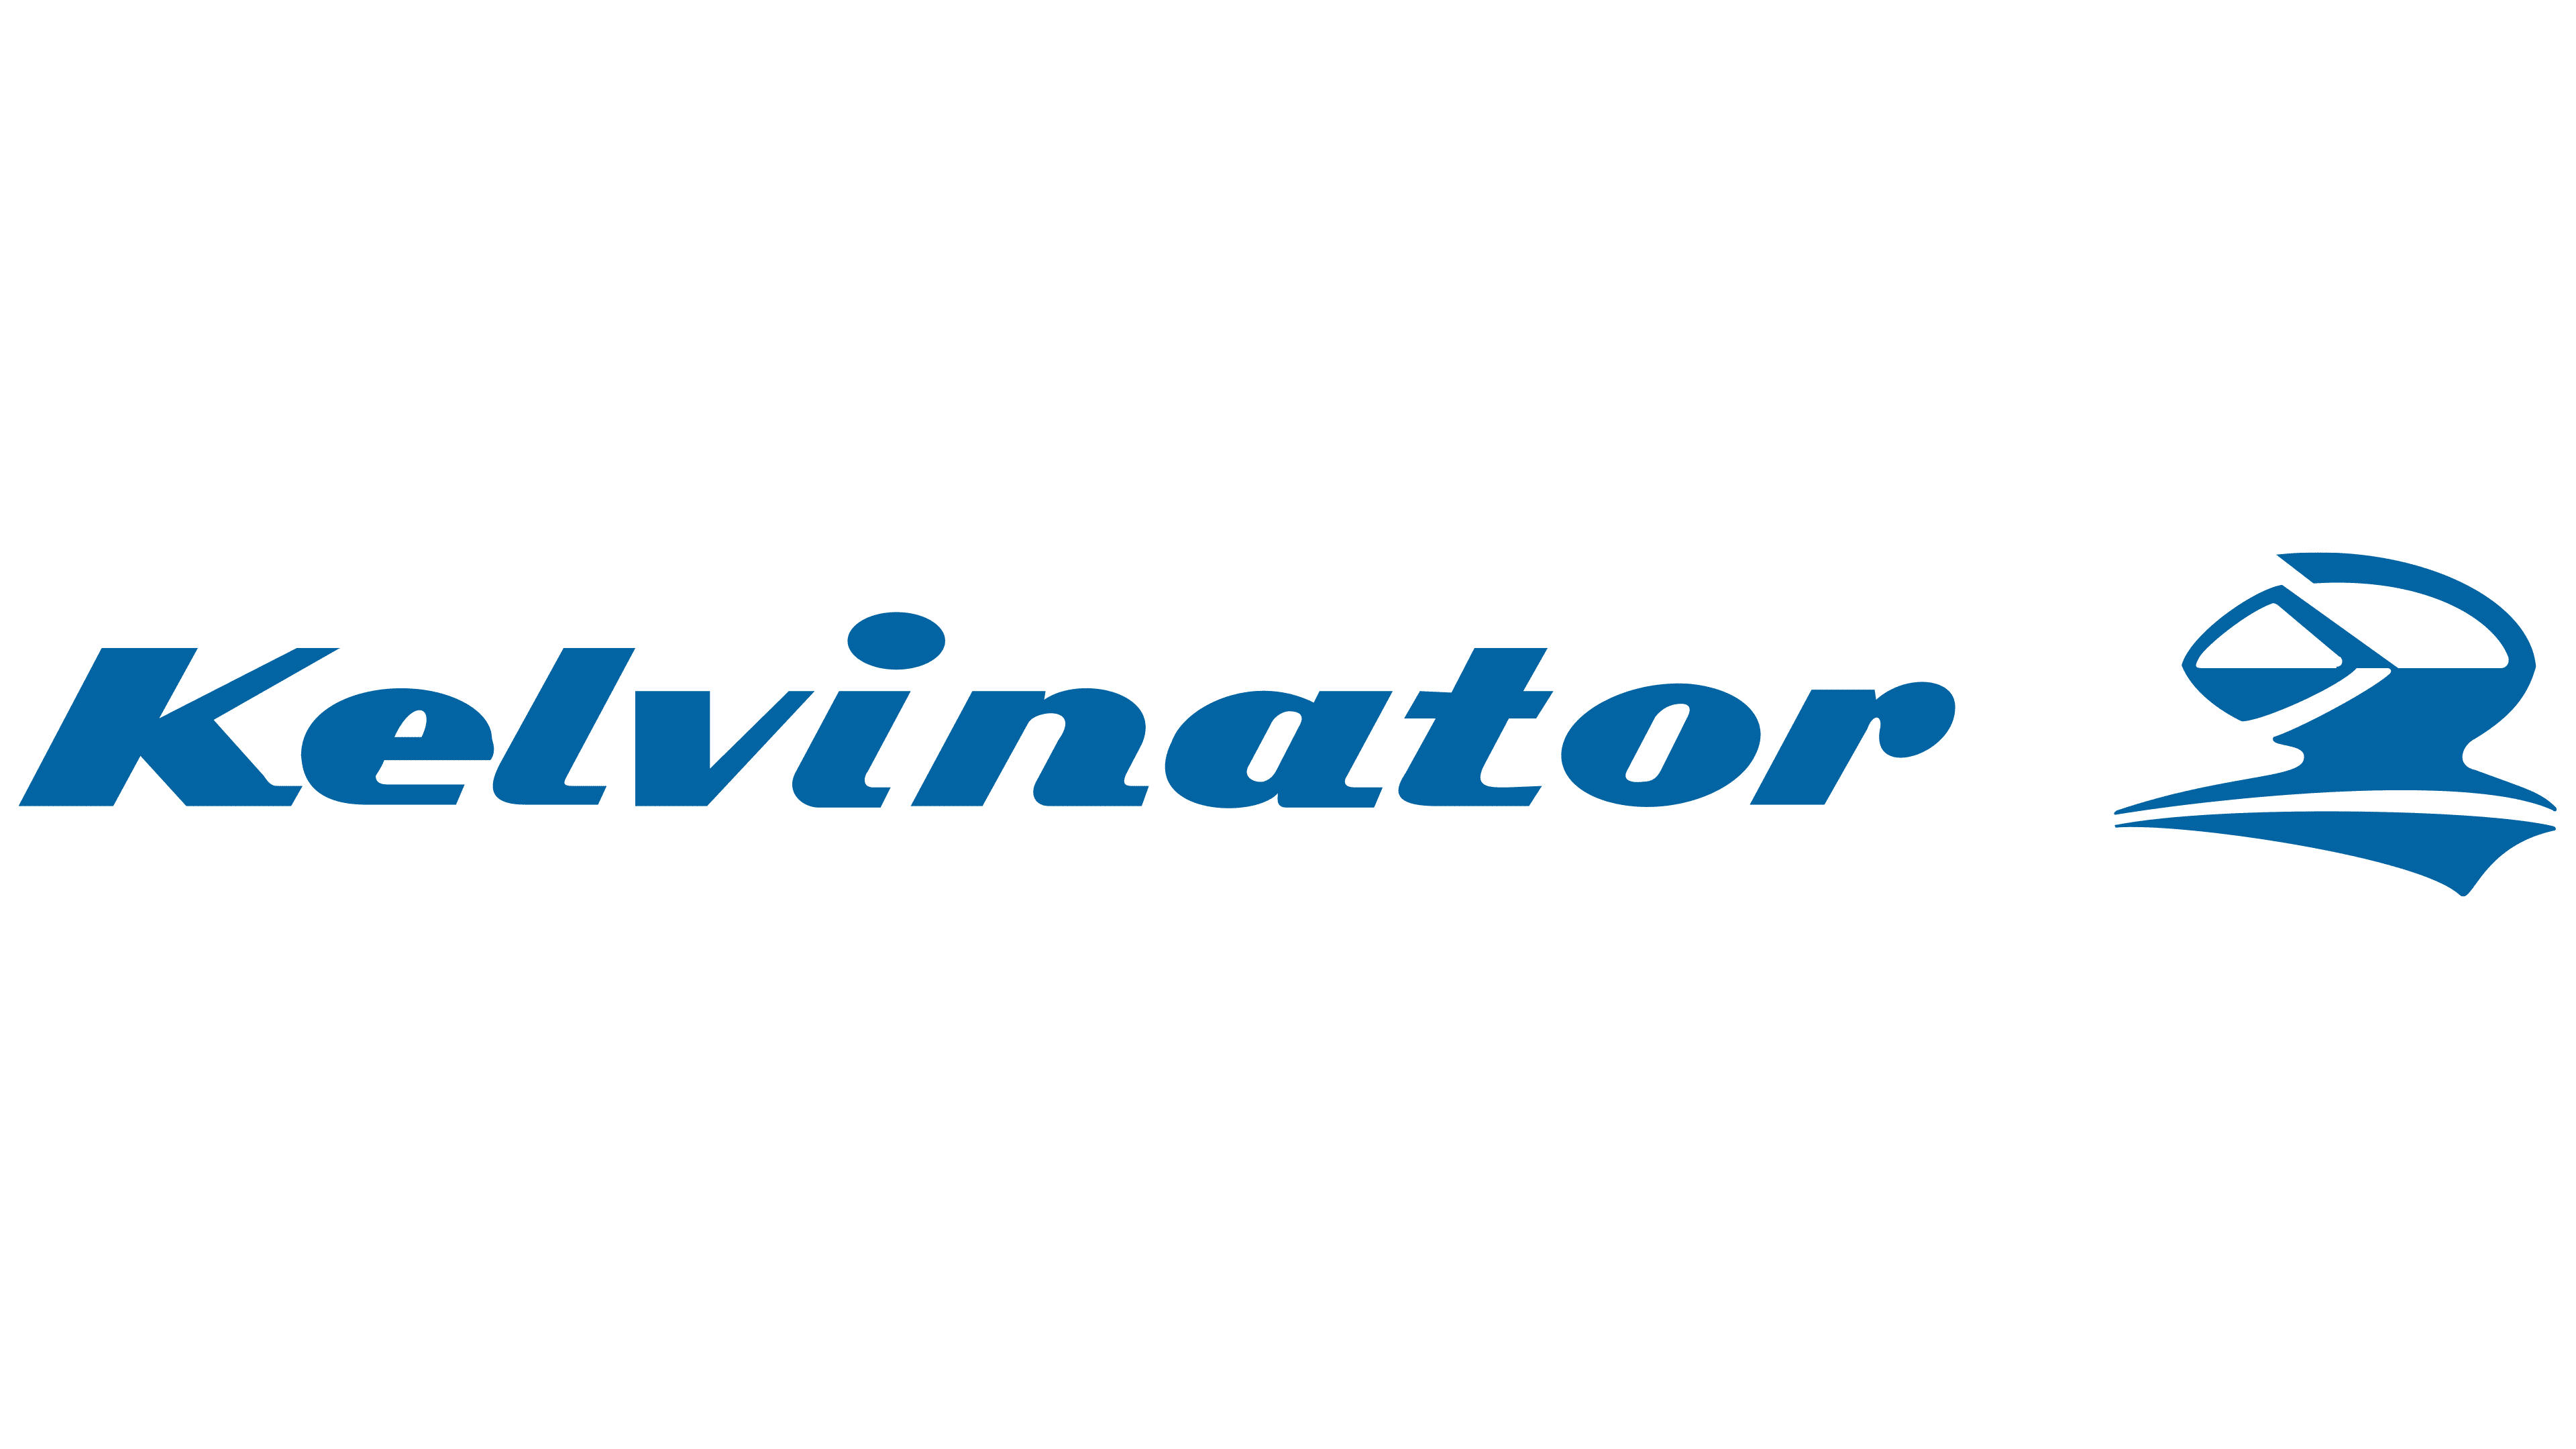 Kelvinator_logo